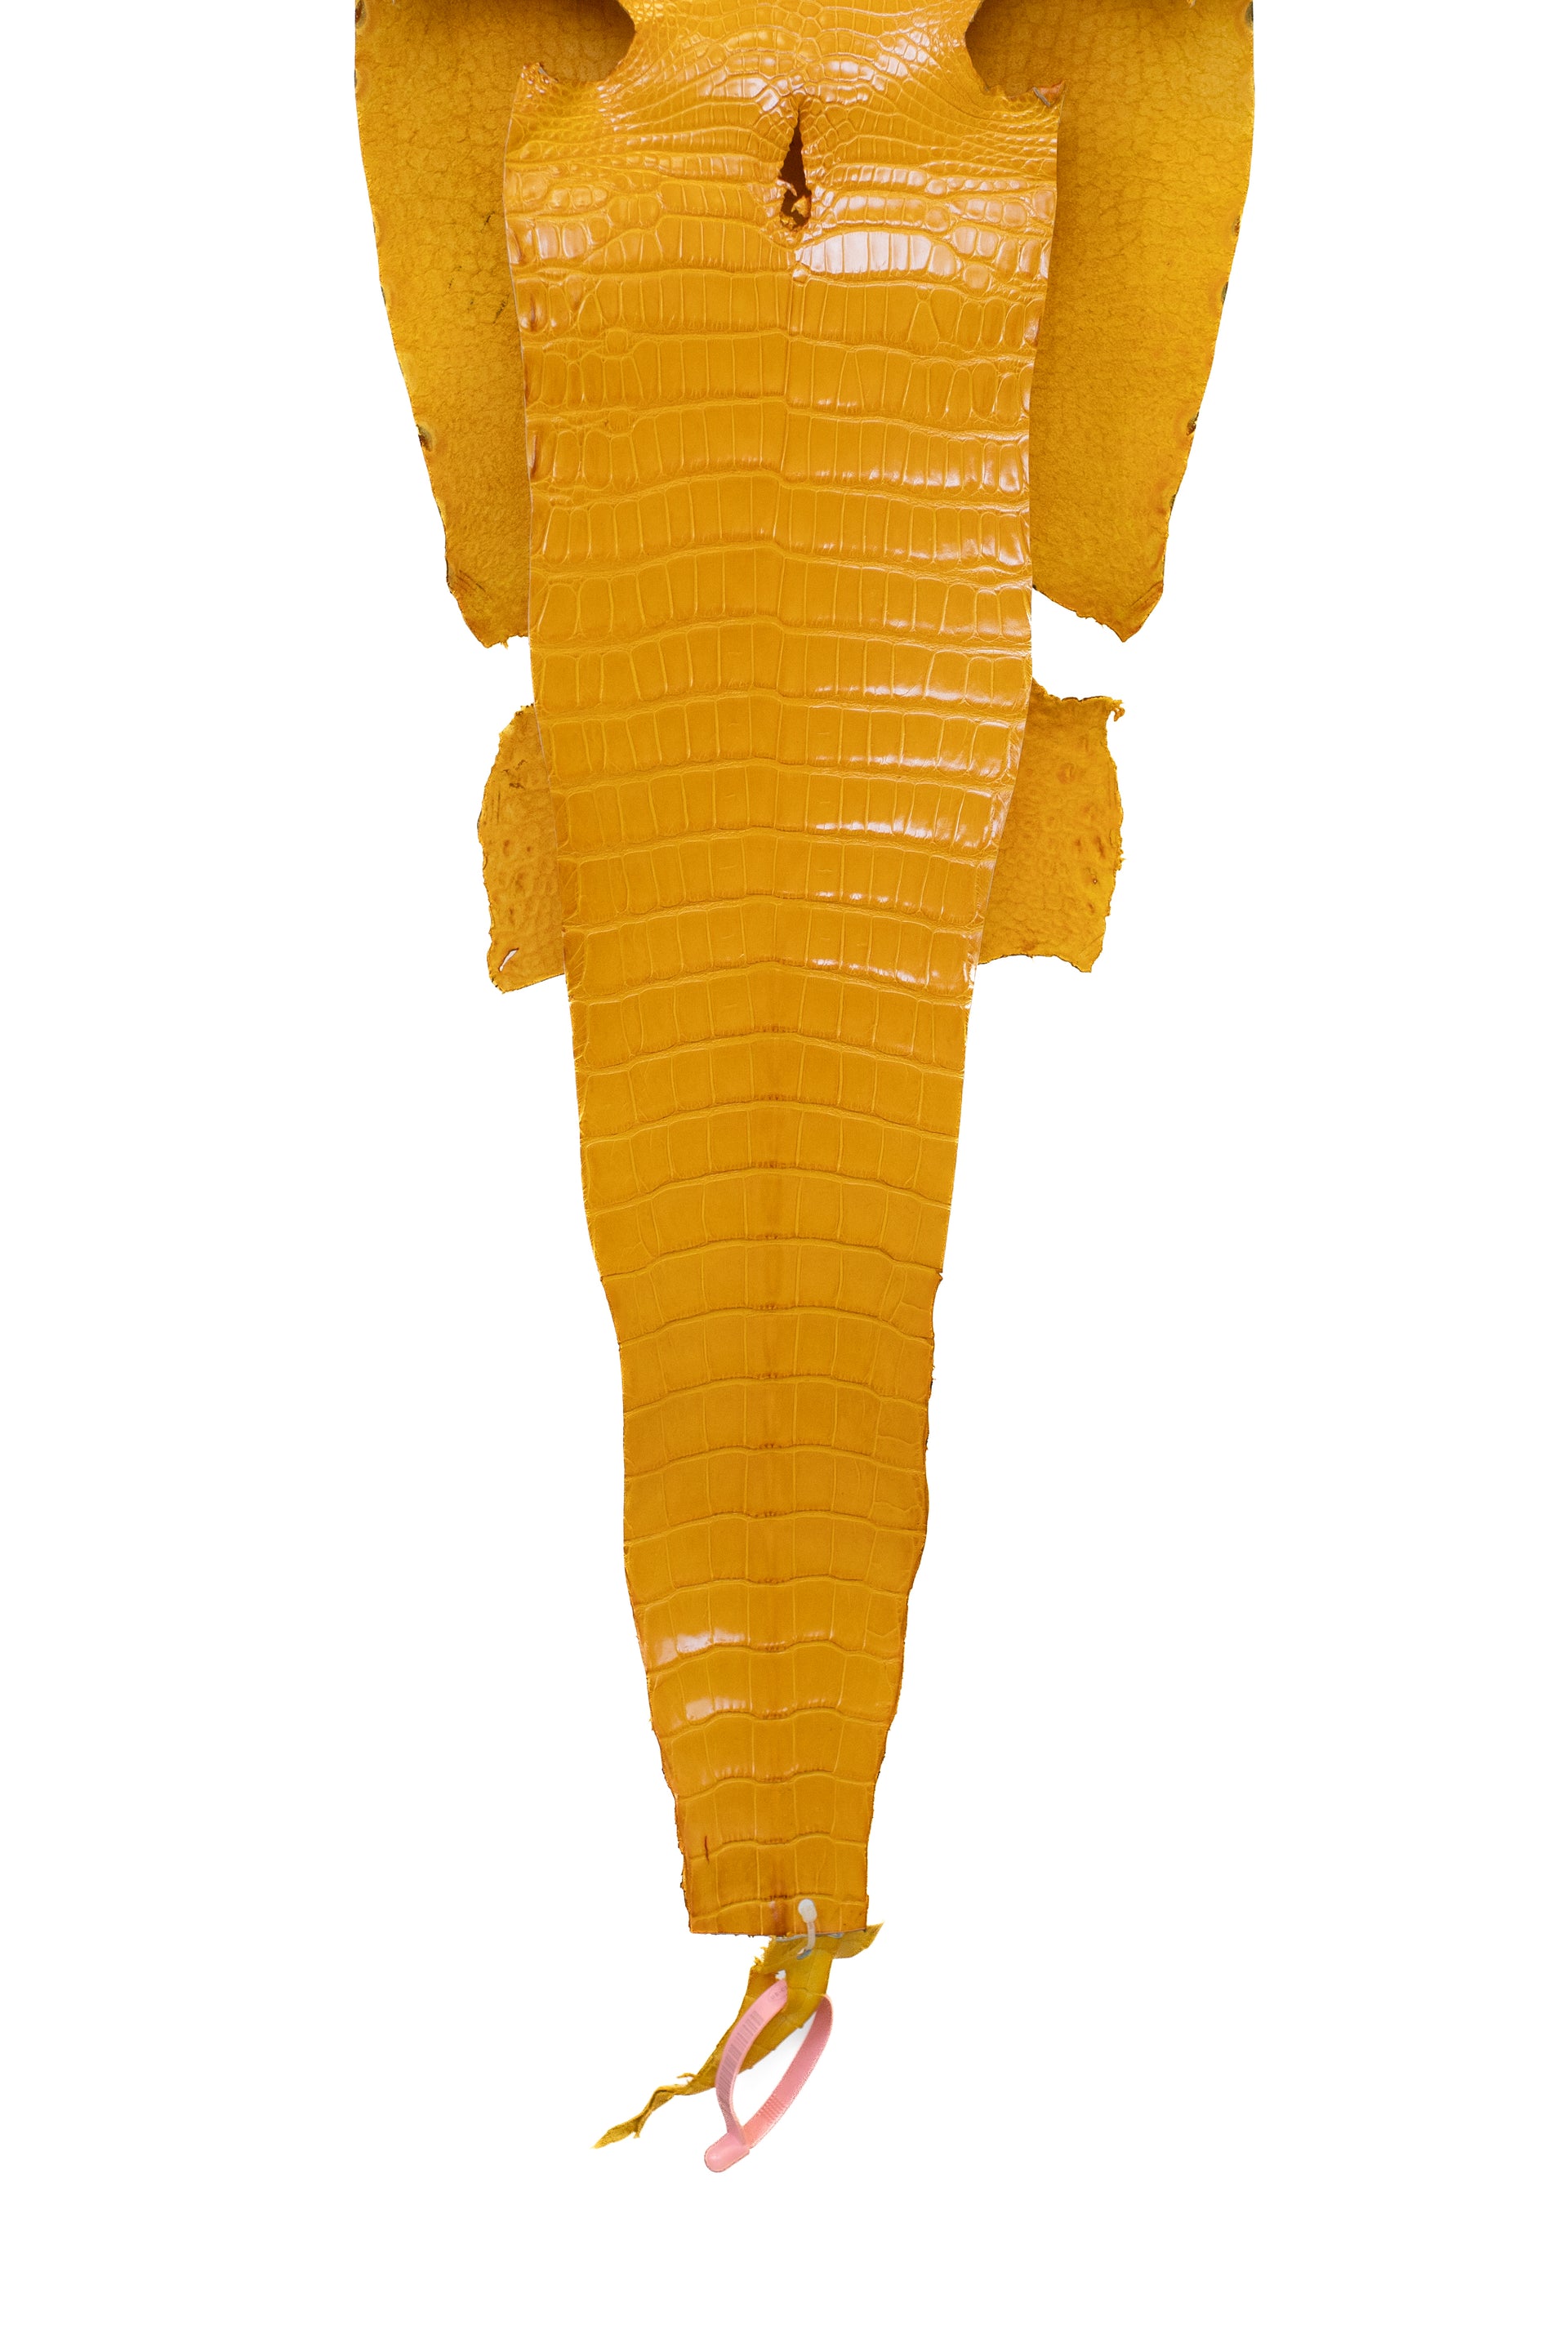 30 cm Grade 2/3 Golden Yellow Millennium Farm Raised American Alligator Leather - Tag: LA21-0328718